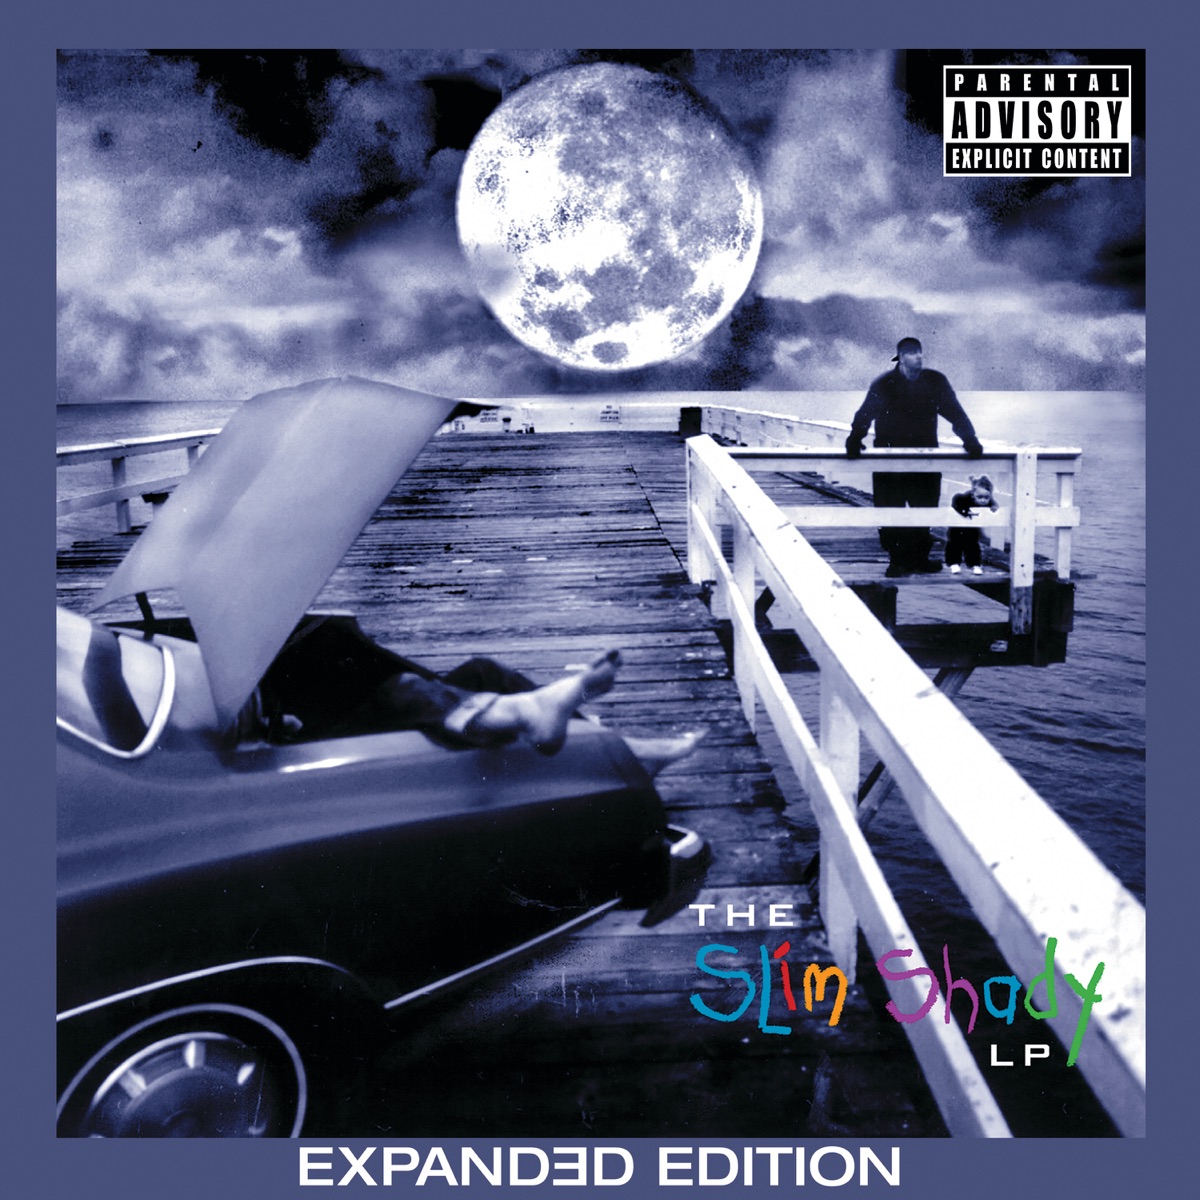 Vintage Y2K Eminem CD Lot 7 Eminem Show Marshall Matters LP Slim Shady  MUSIC CDs